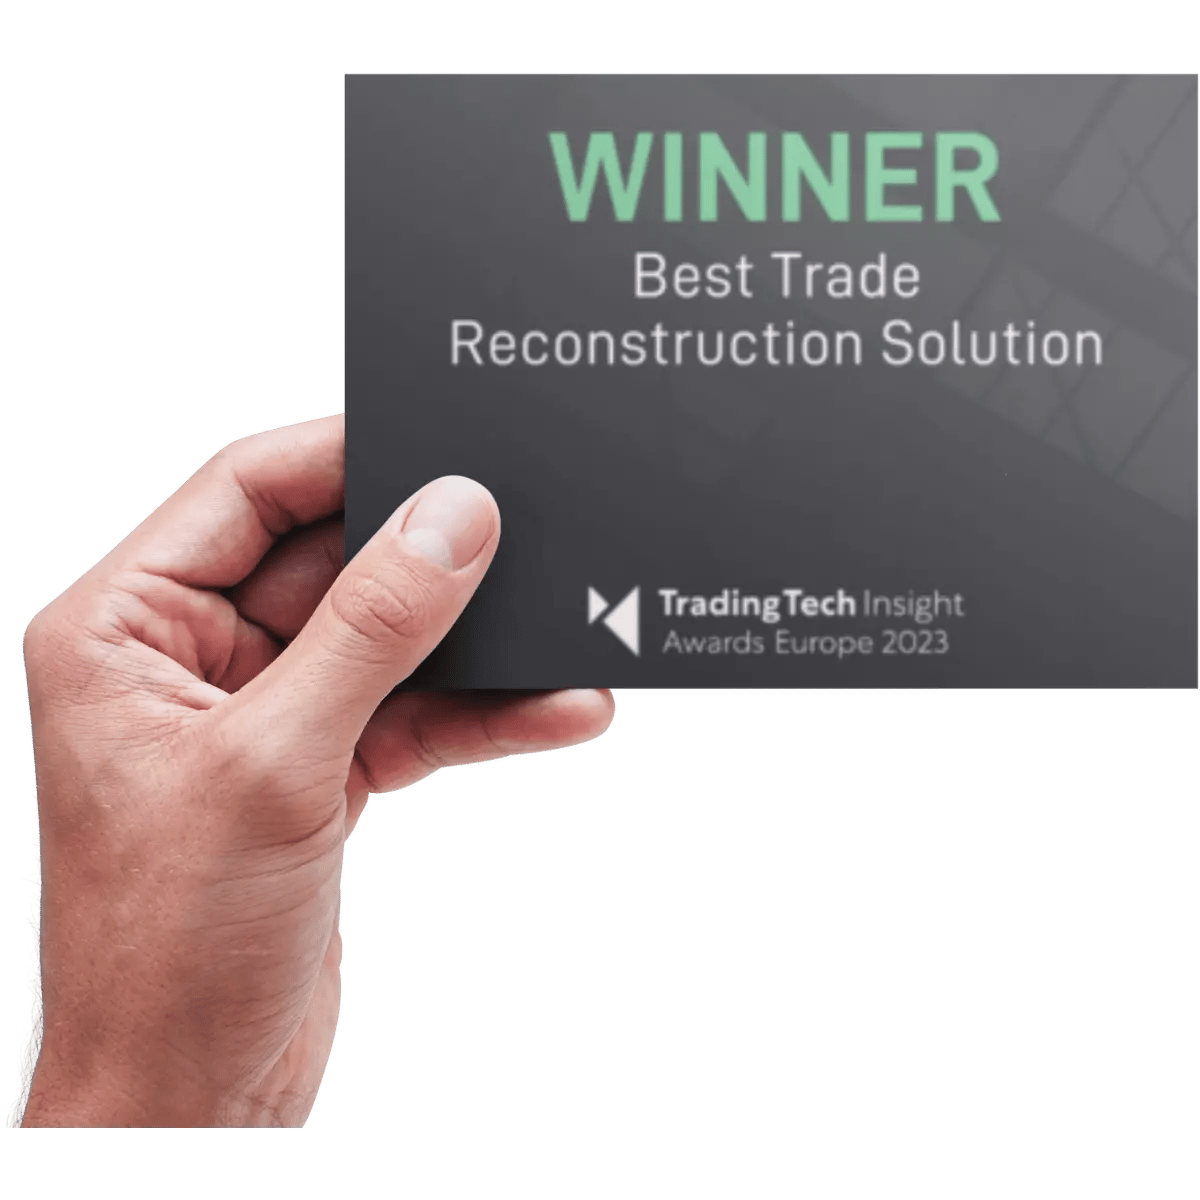 TradingTech Insight Awards Europe 2023 - Best Trade Reconstruction Solution